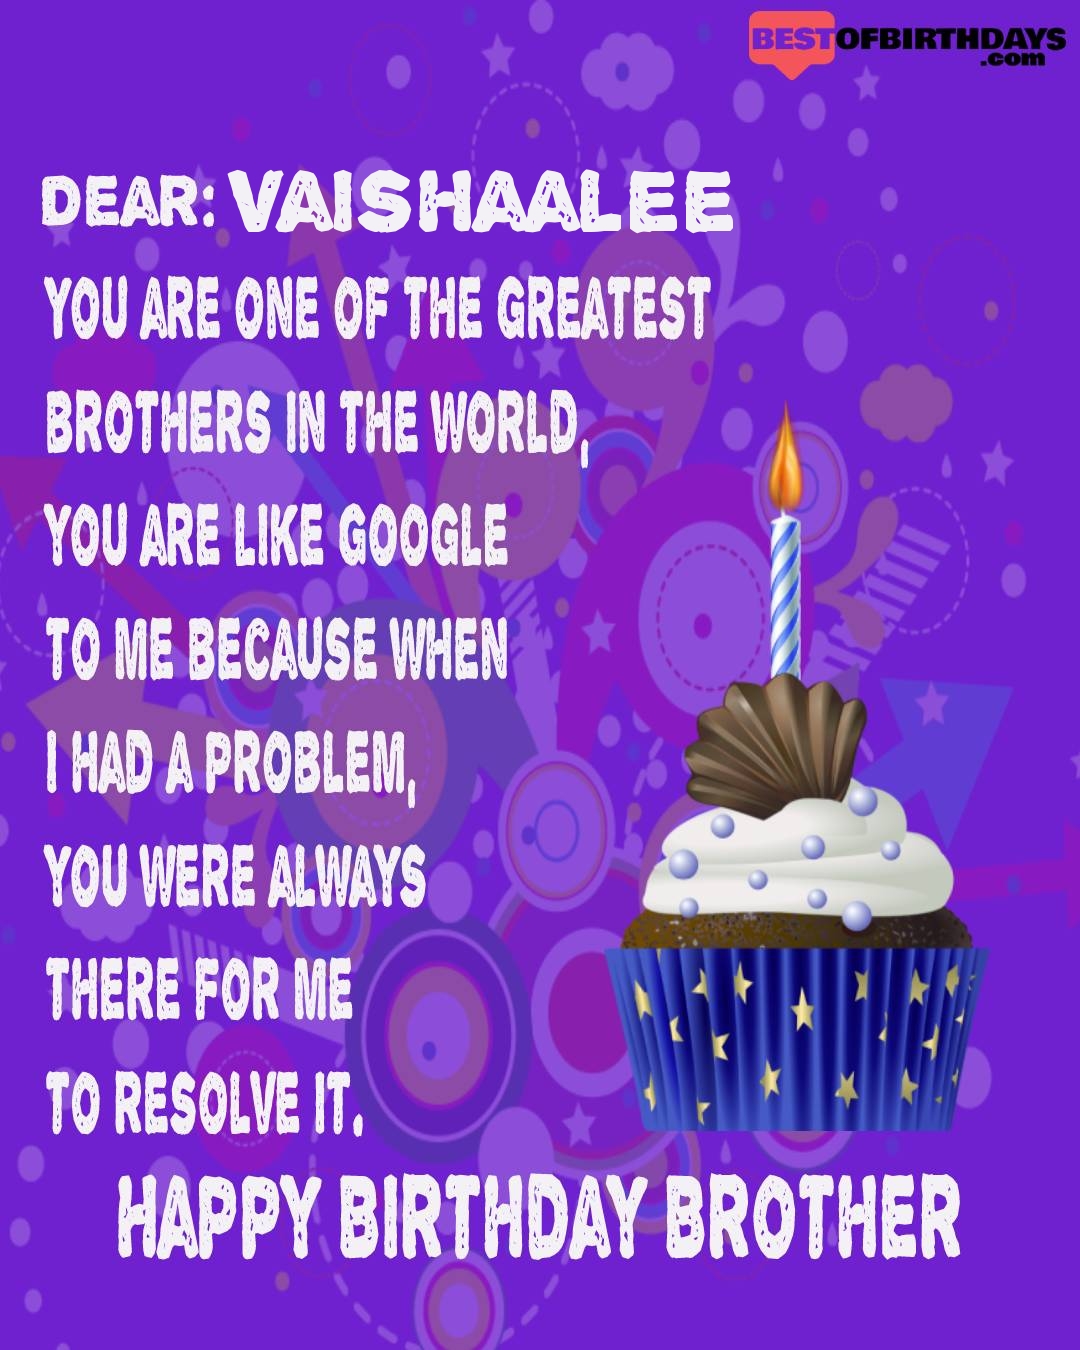 Happy birthday vaishaalee bhai brother bro